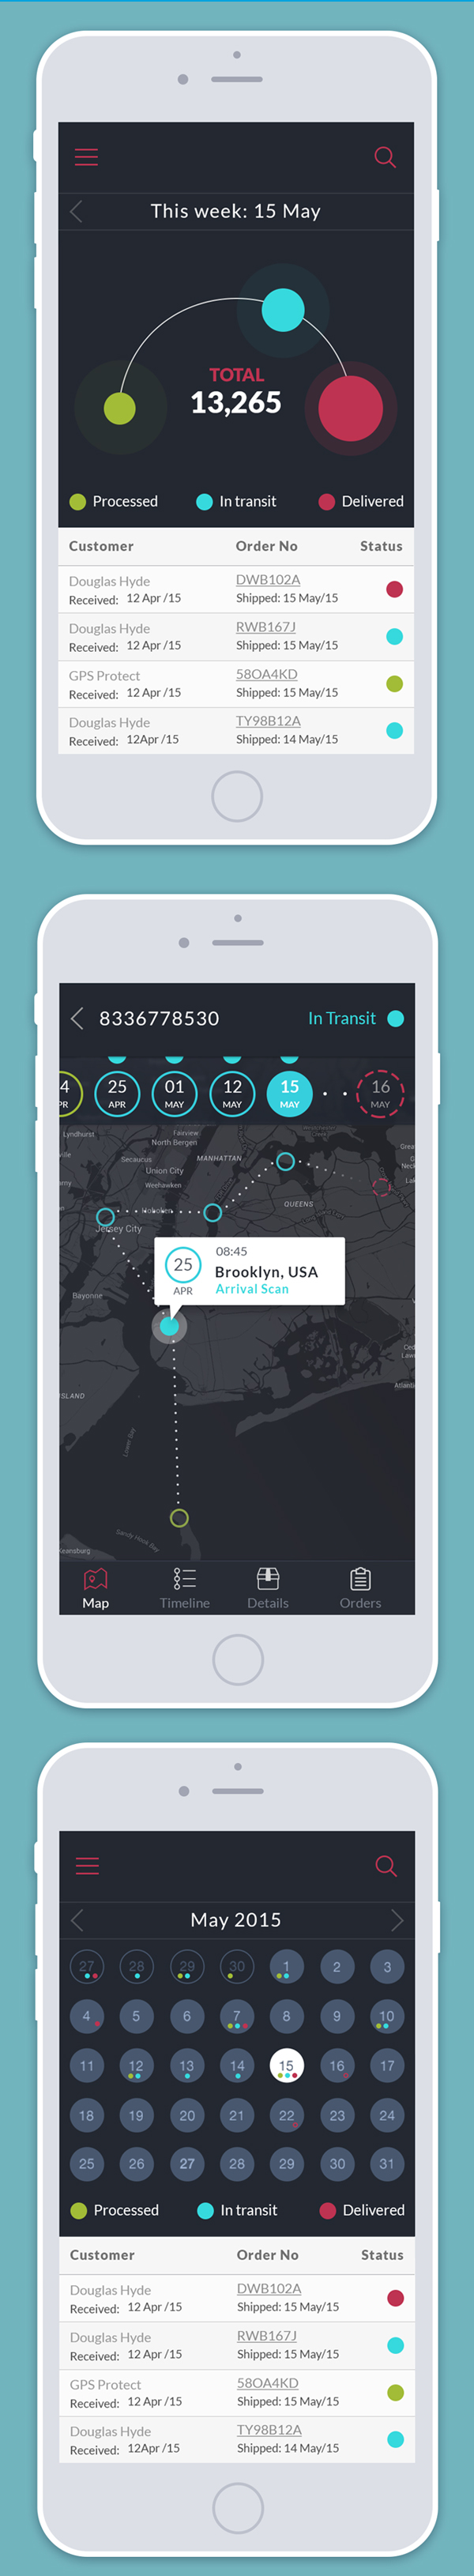 Tracking App UI Design by Daria